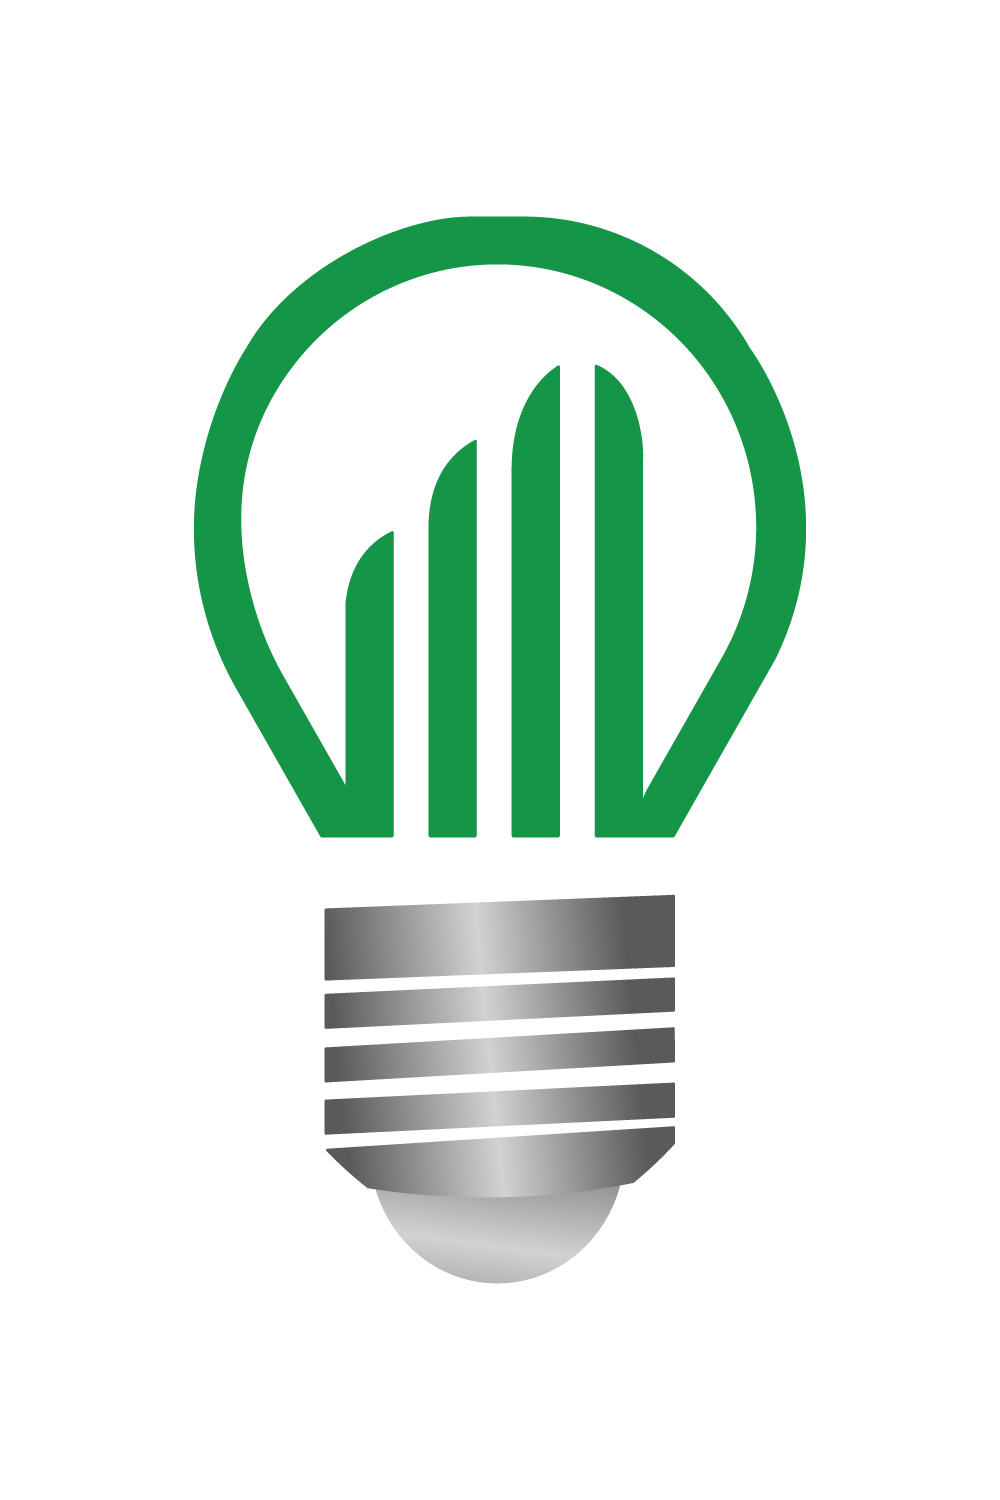 Income Idea logo design Invest and stock idea vector template image design Bulb logo design Electronic light logo design best icon pinterest preview image.